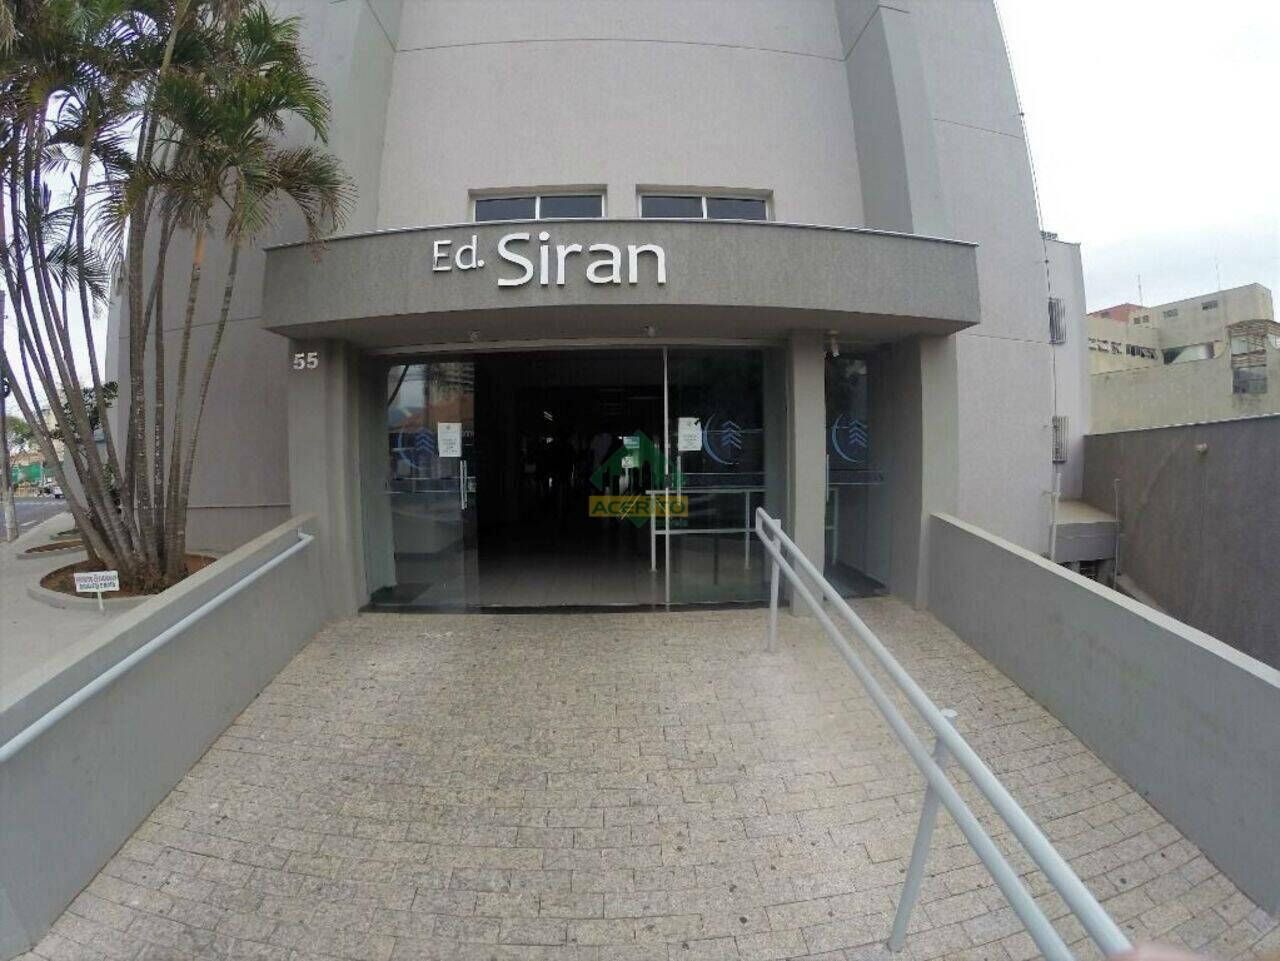 Sala Edifício Siran, Araçatuba - SP